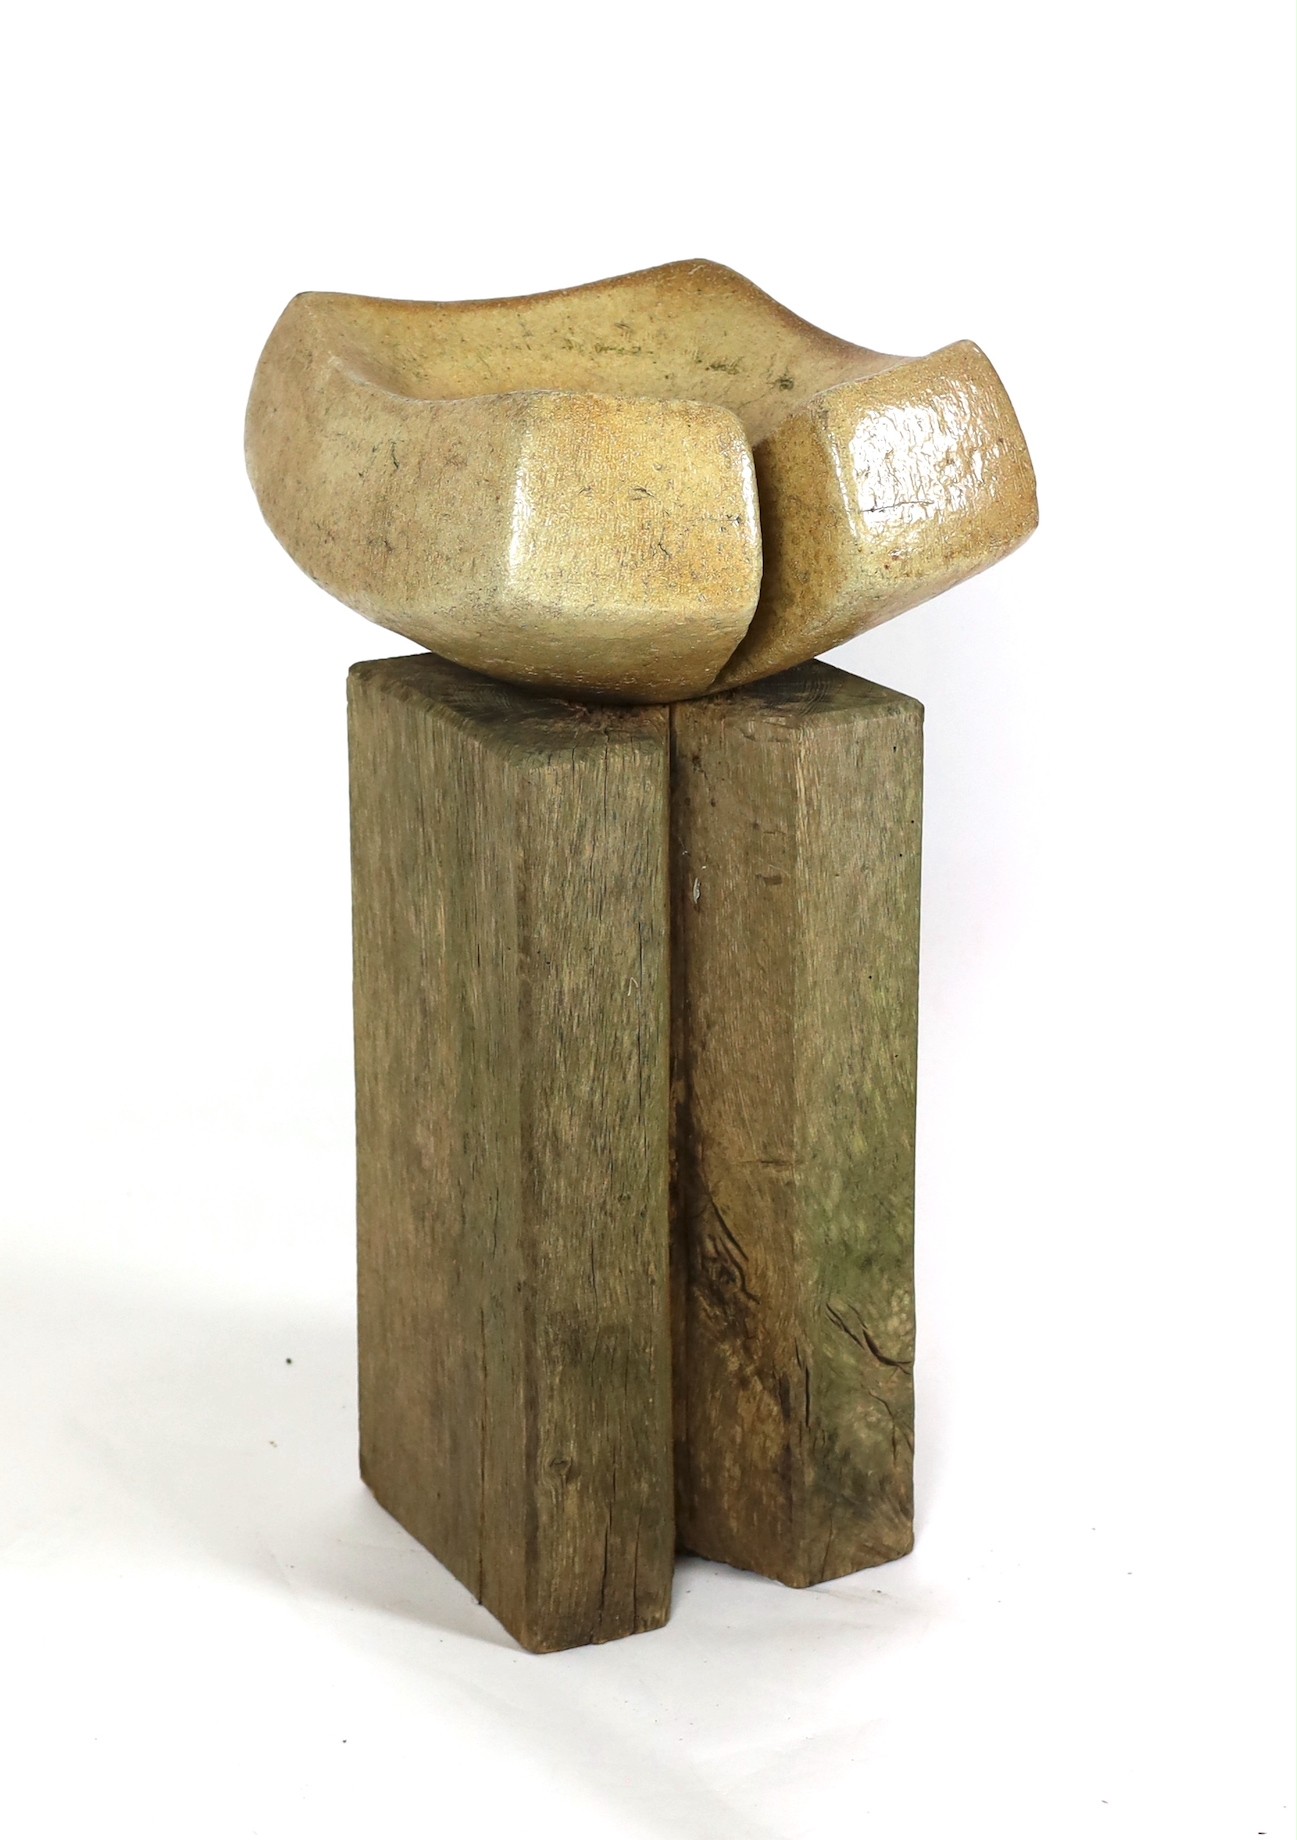 Sarah Walton (b.1945), a large salt glaze stoneware bird bath on a wood pedestal, total dimensions 42cm wide 82cm high